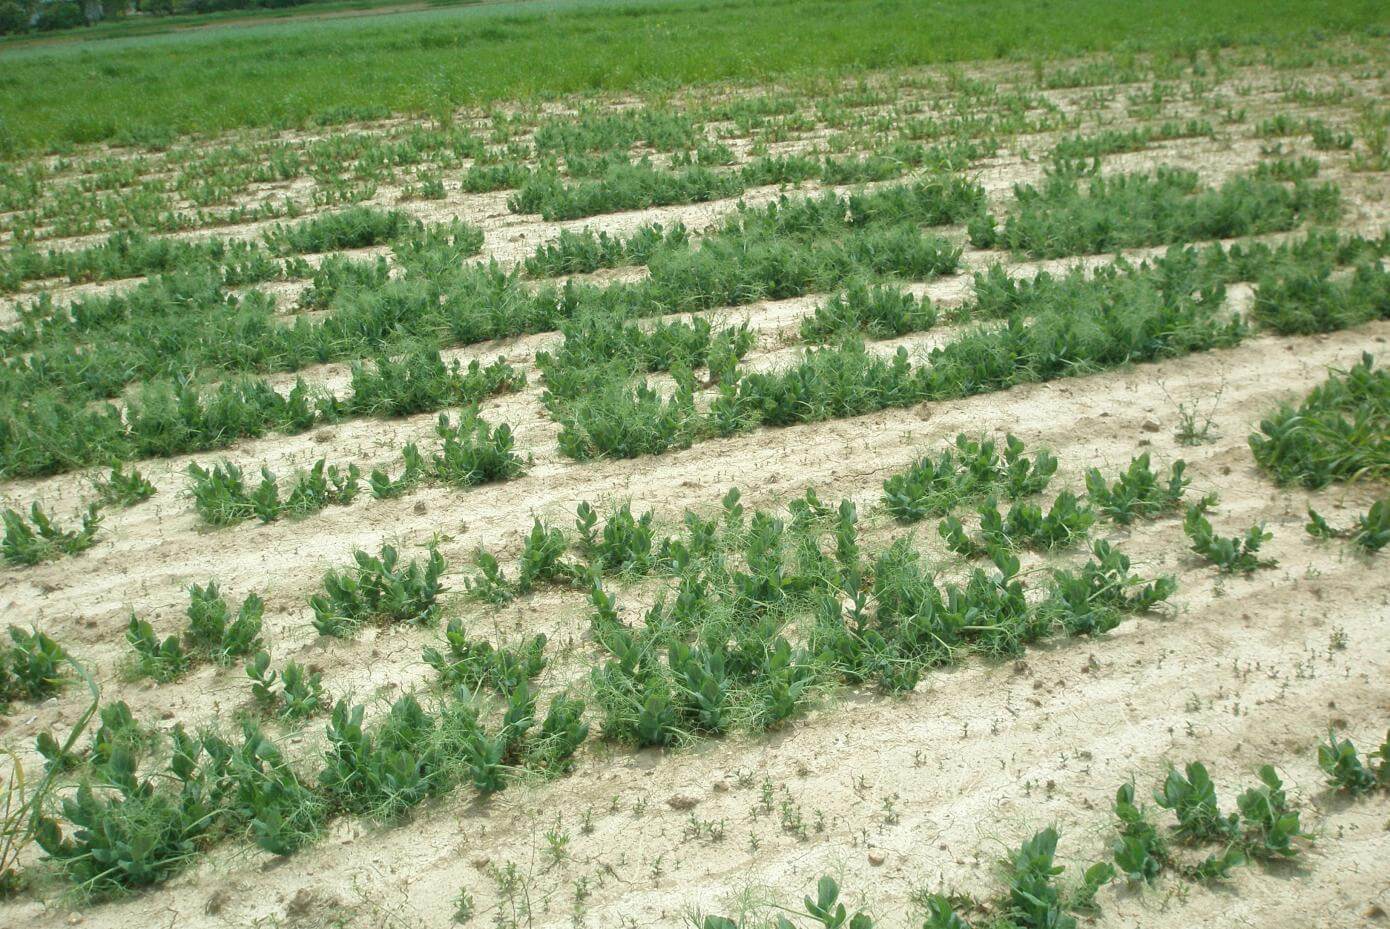 Windham winter peas in a field